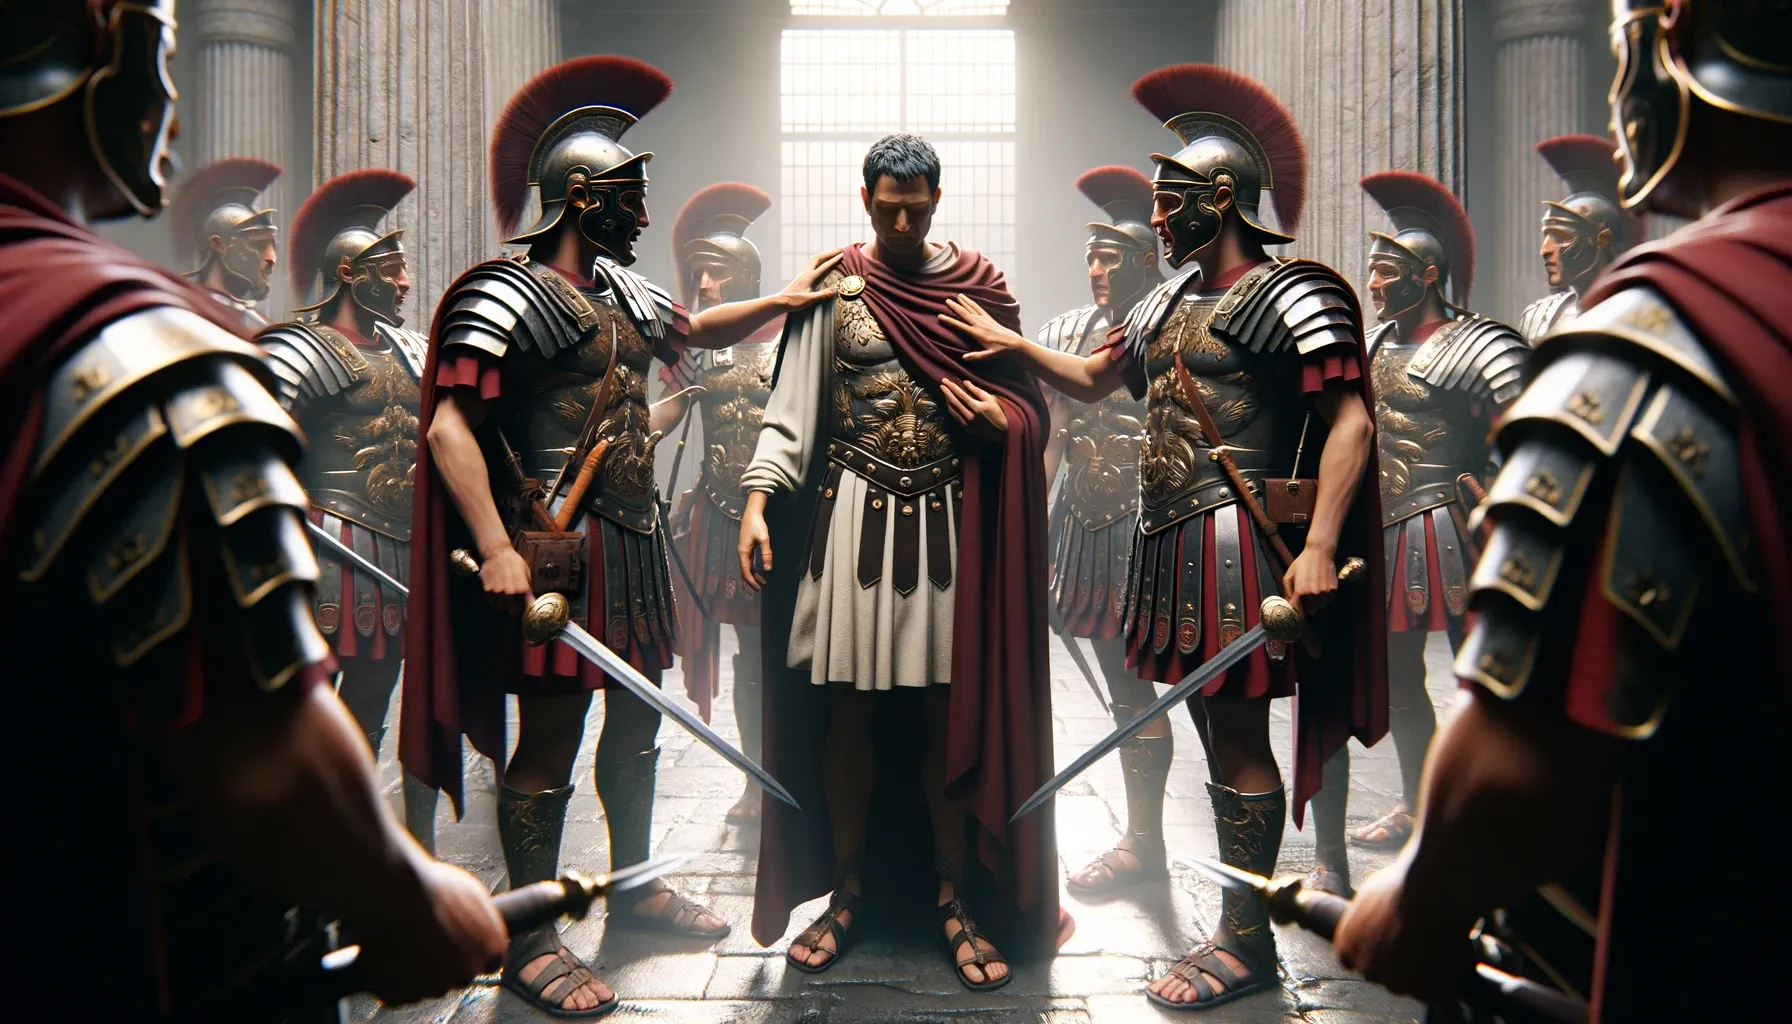 The Praetorian Guard: Rome’s elite bodyguards